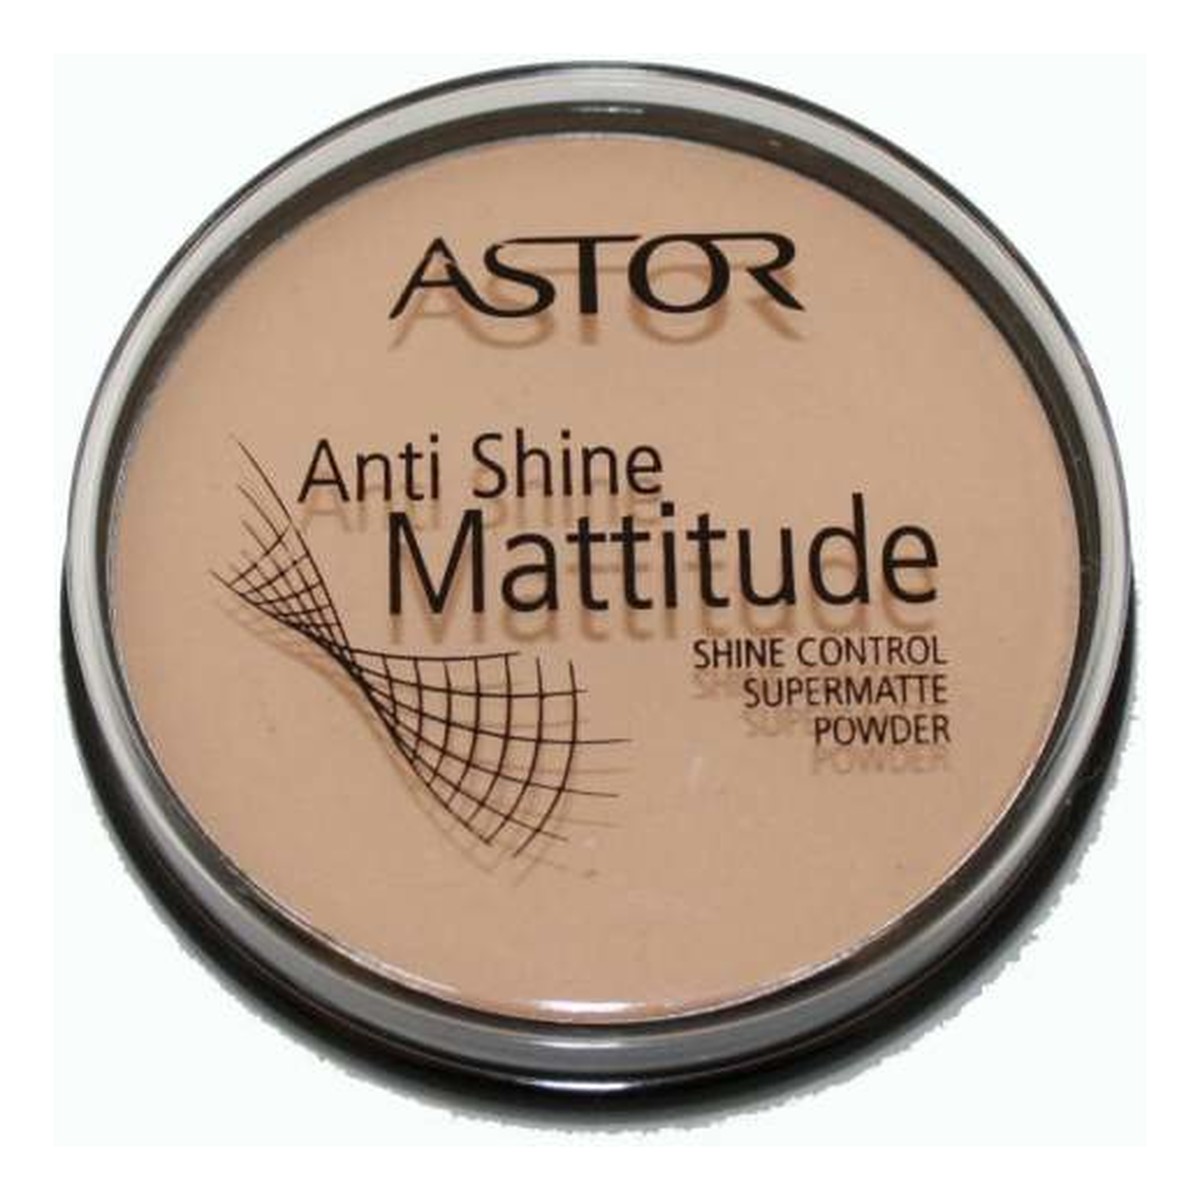 Astor Anti Shine Mattitude Puder